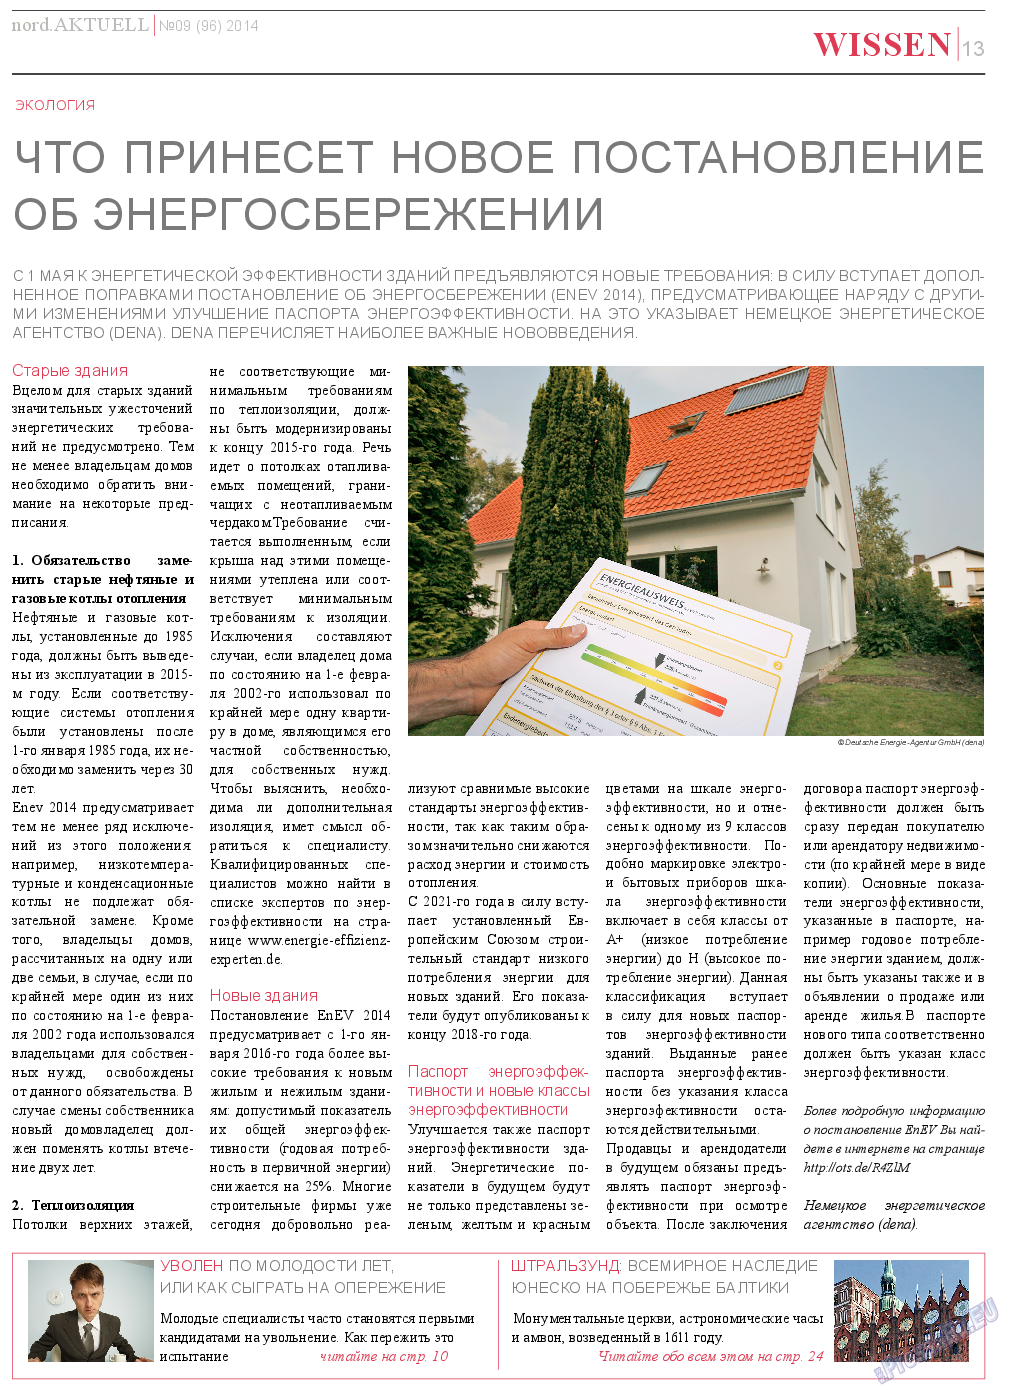 nord.Aktuell, газета. 2014 №9 стр.13